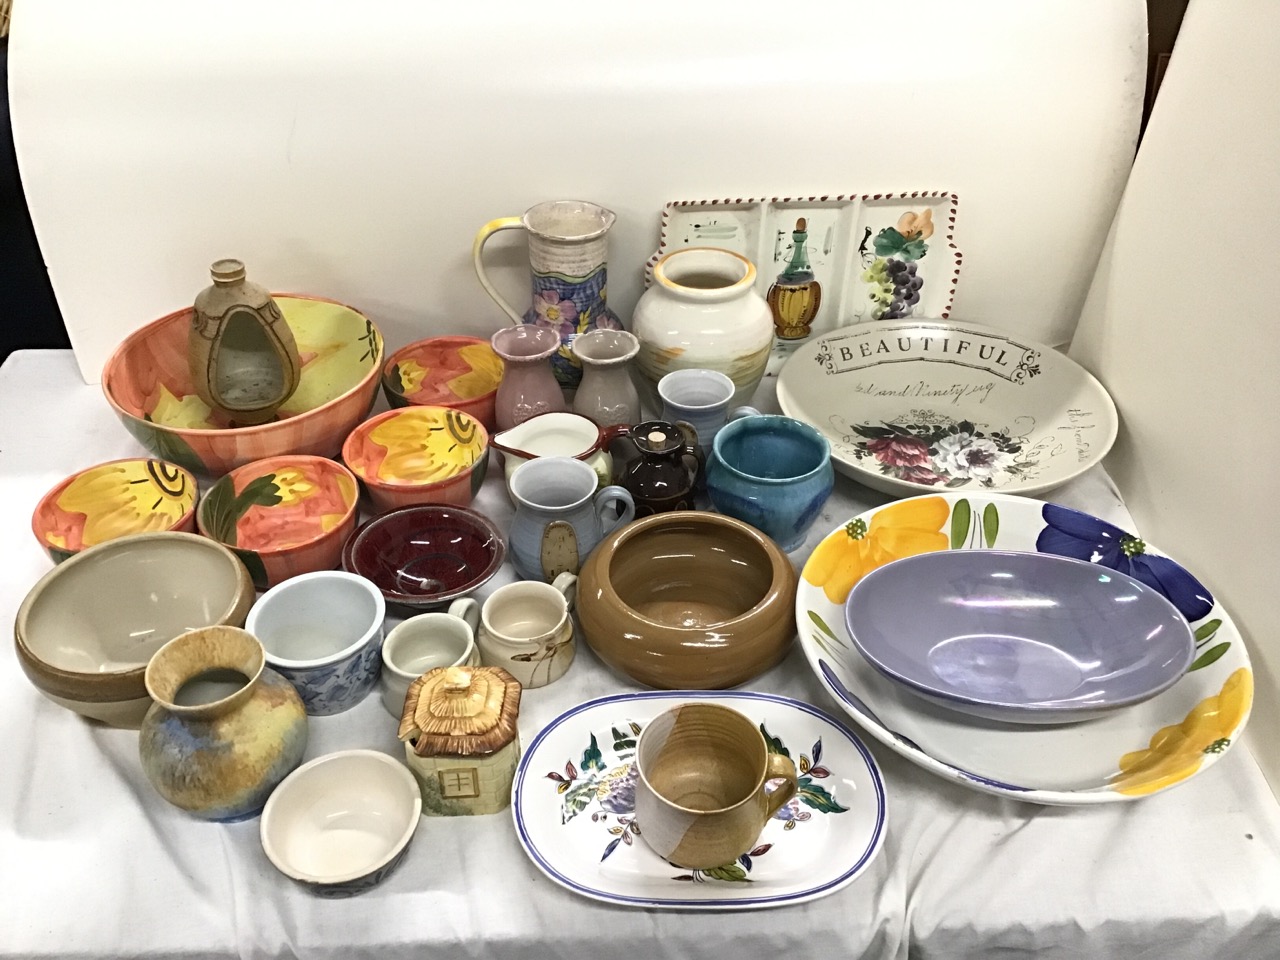 Miscellaneous ceramics - studio pottery bowls, mugs, vases & candle holder, a handpainted art deco